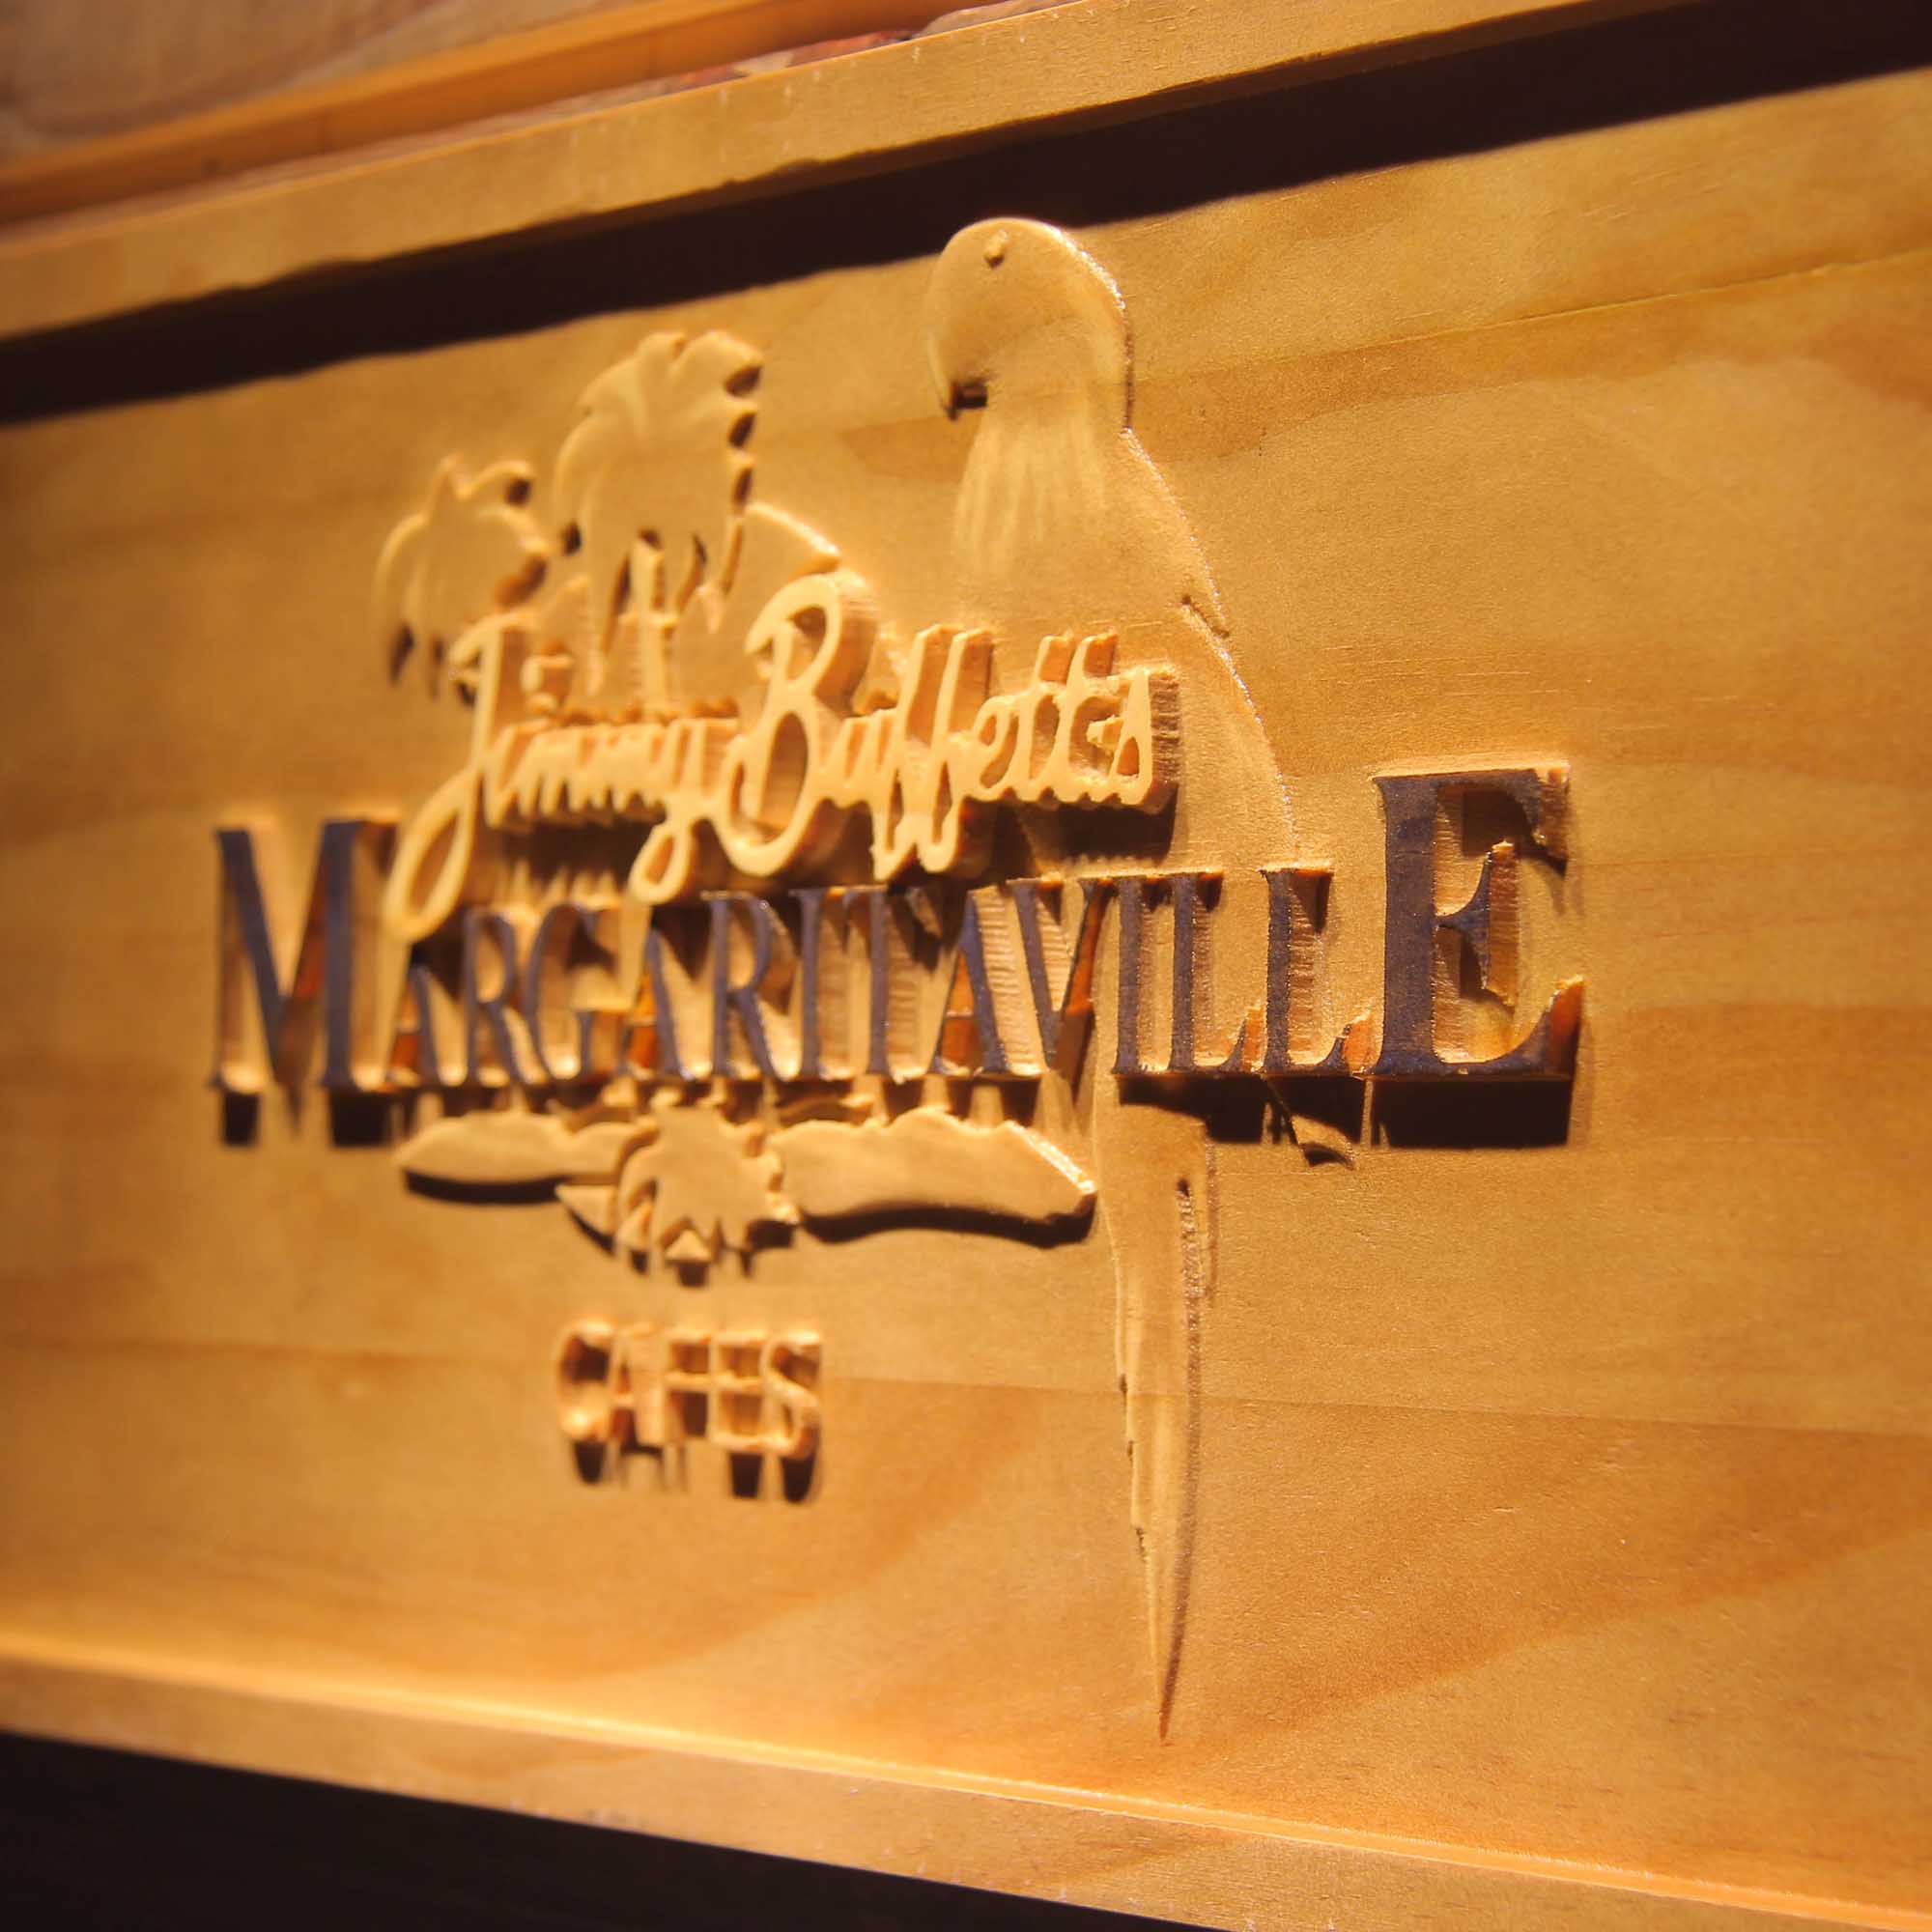 Jimmy Buffett's Margaritaville Caf茅 3D Wooden Engrave Sign